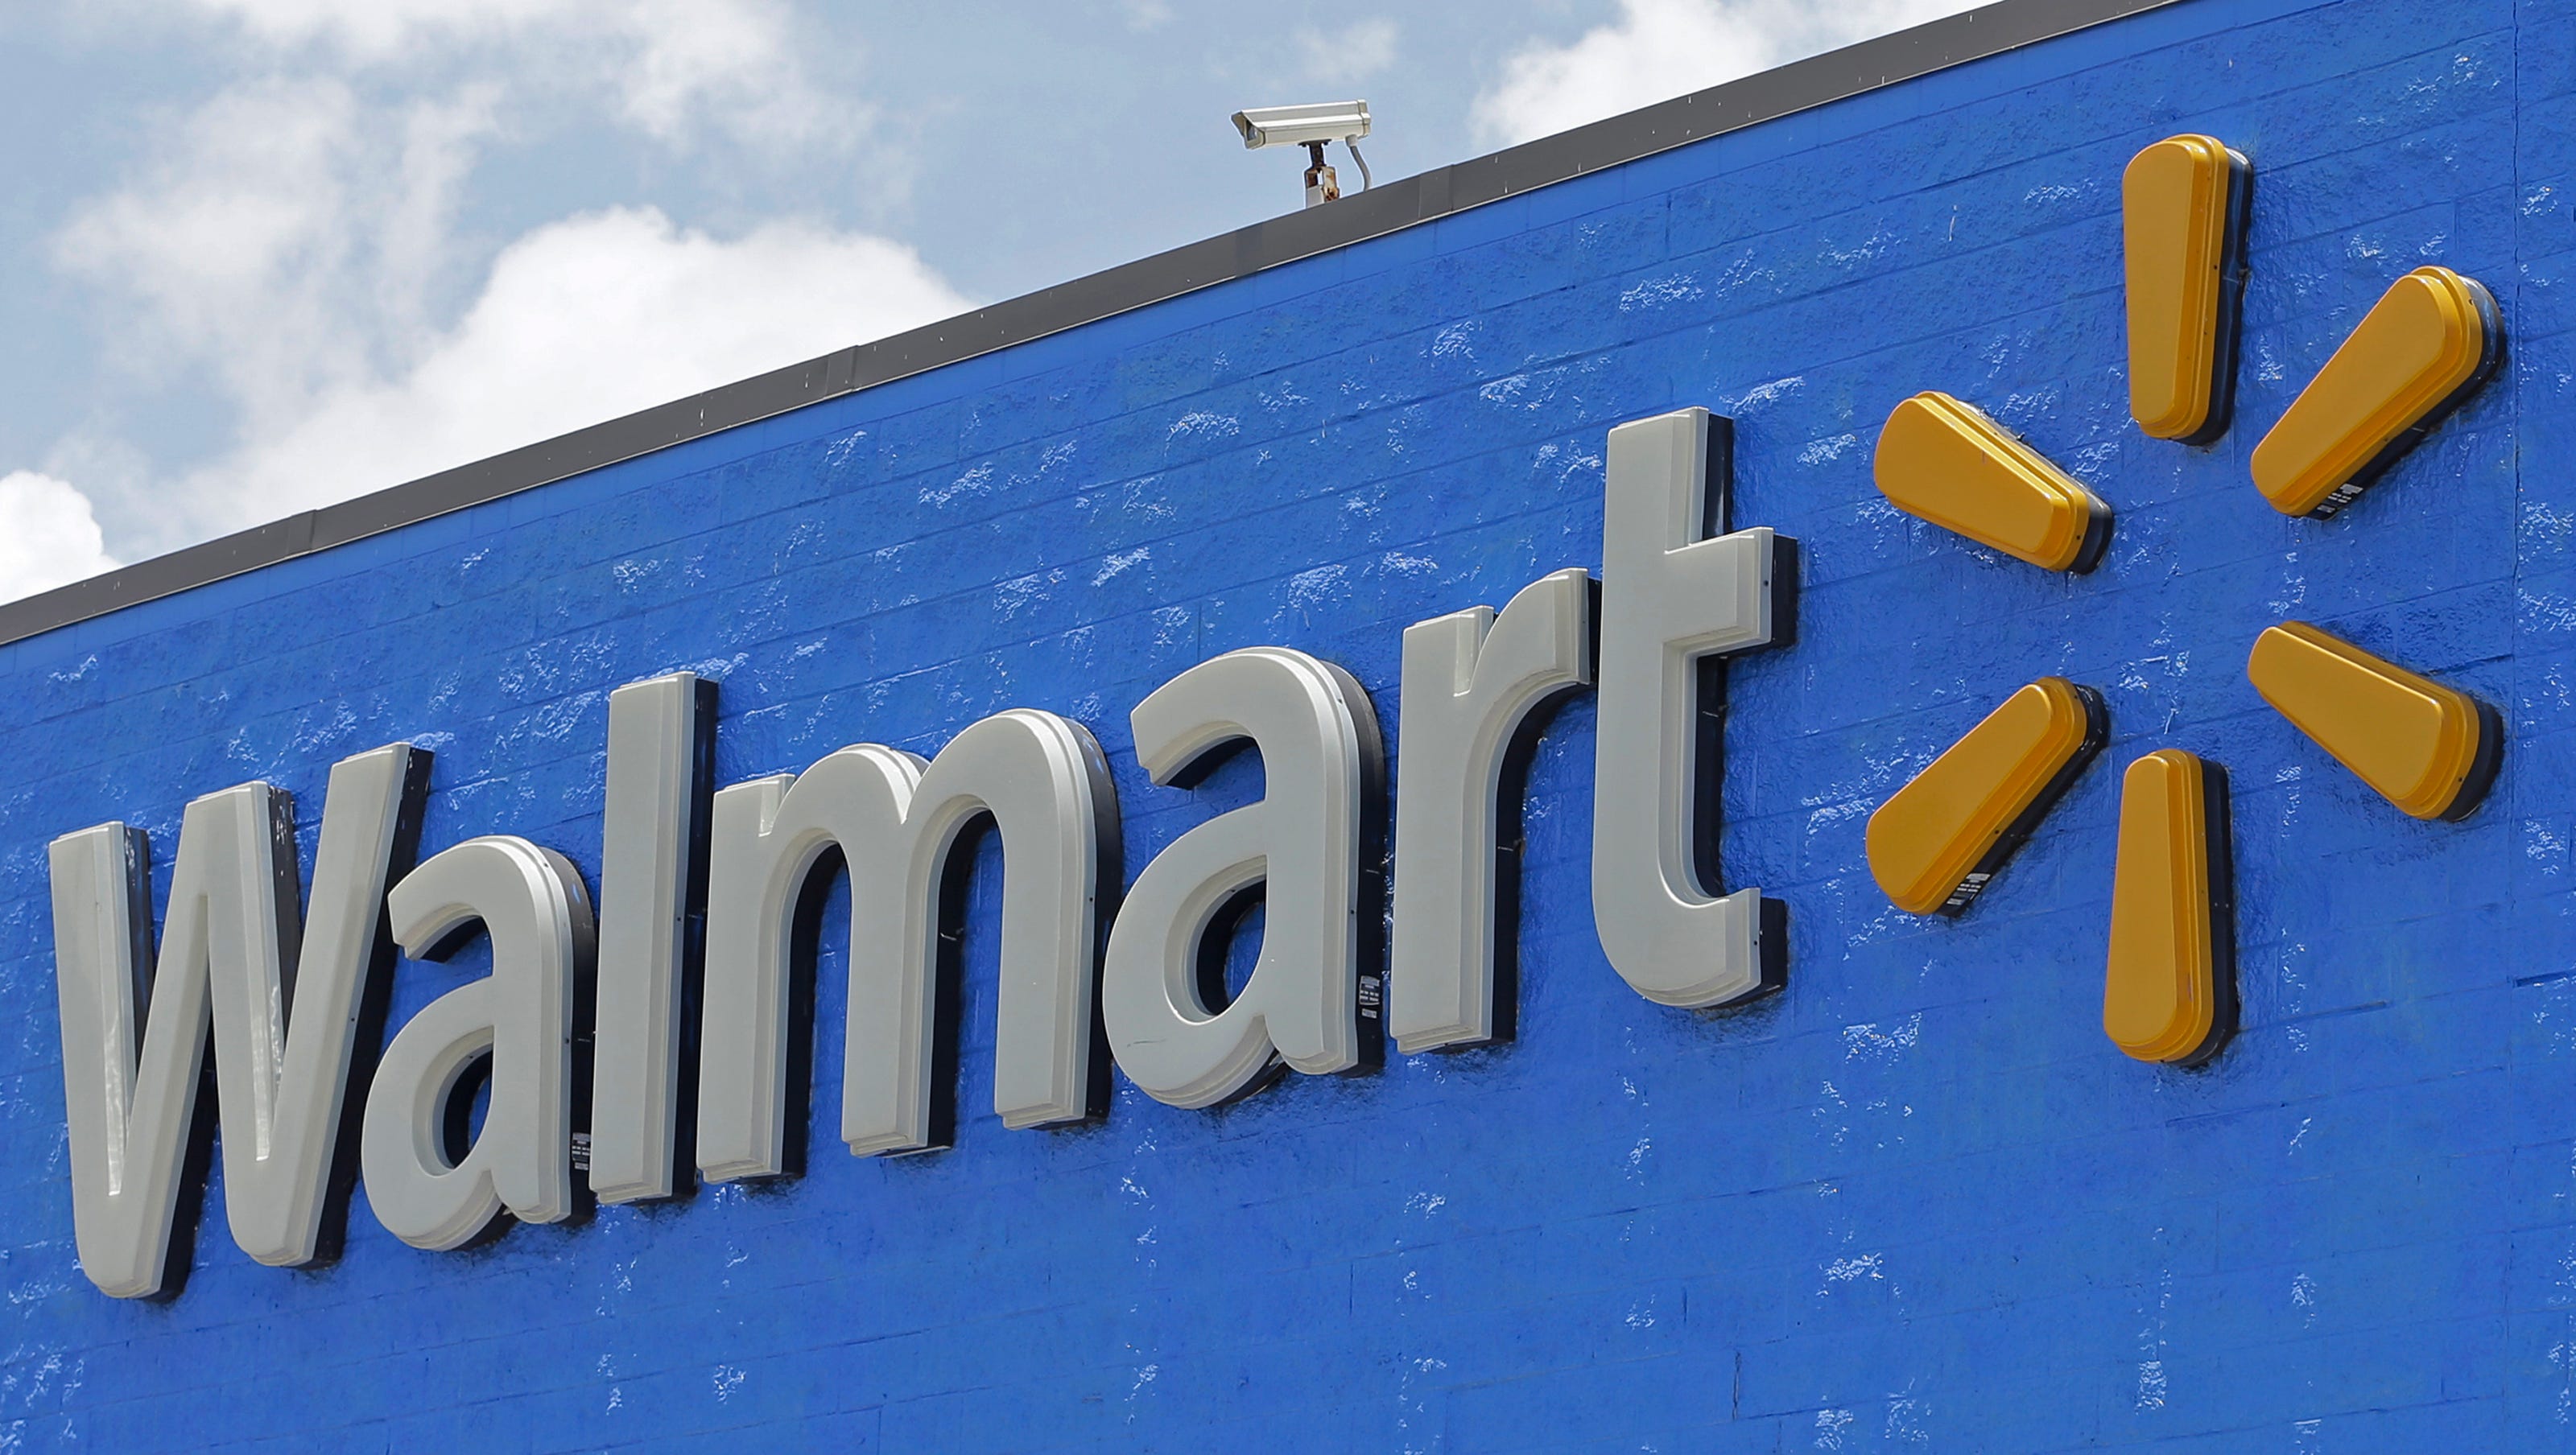 20 Year Old Sues Dick S Sporting Goods Walmart Over New Gun Policies